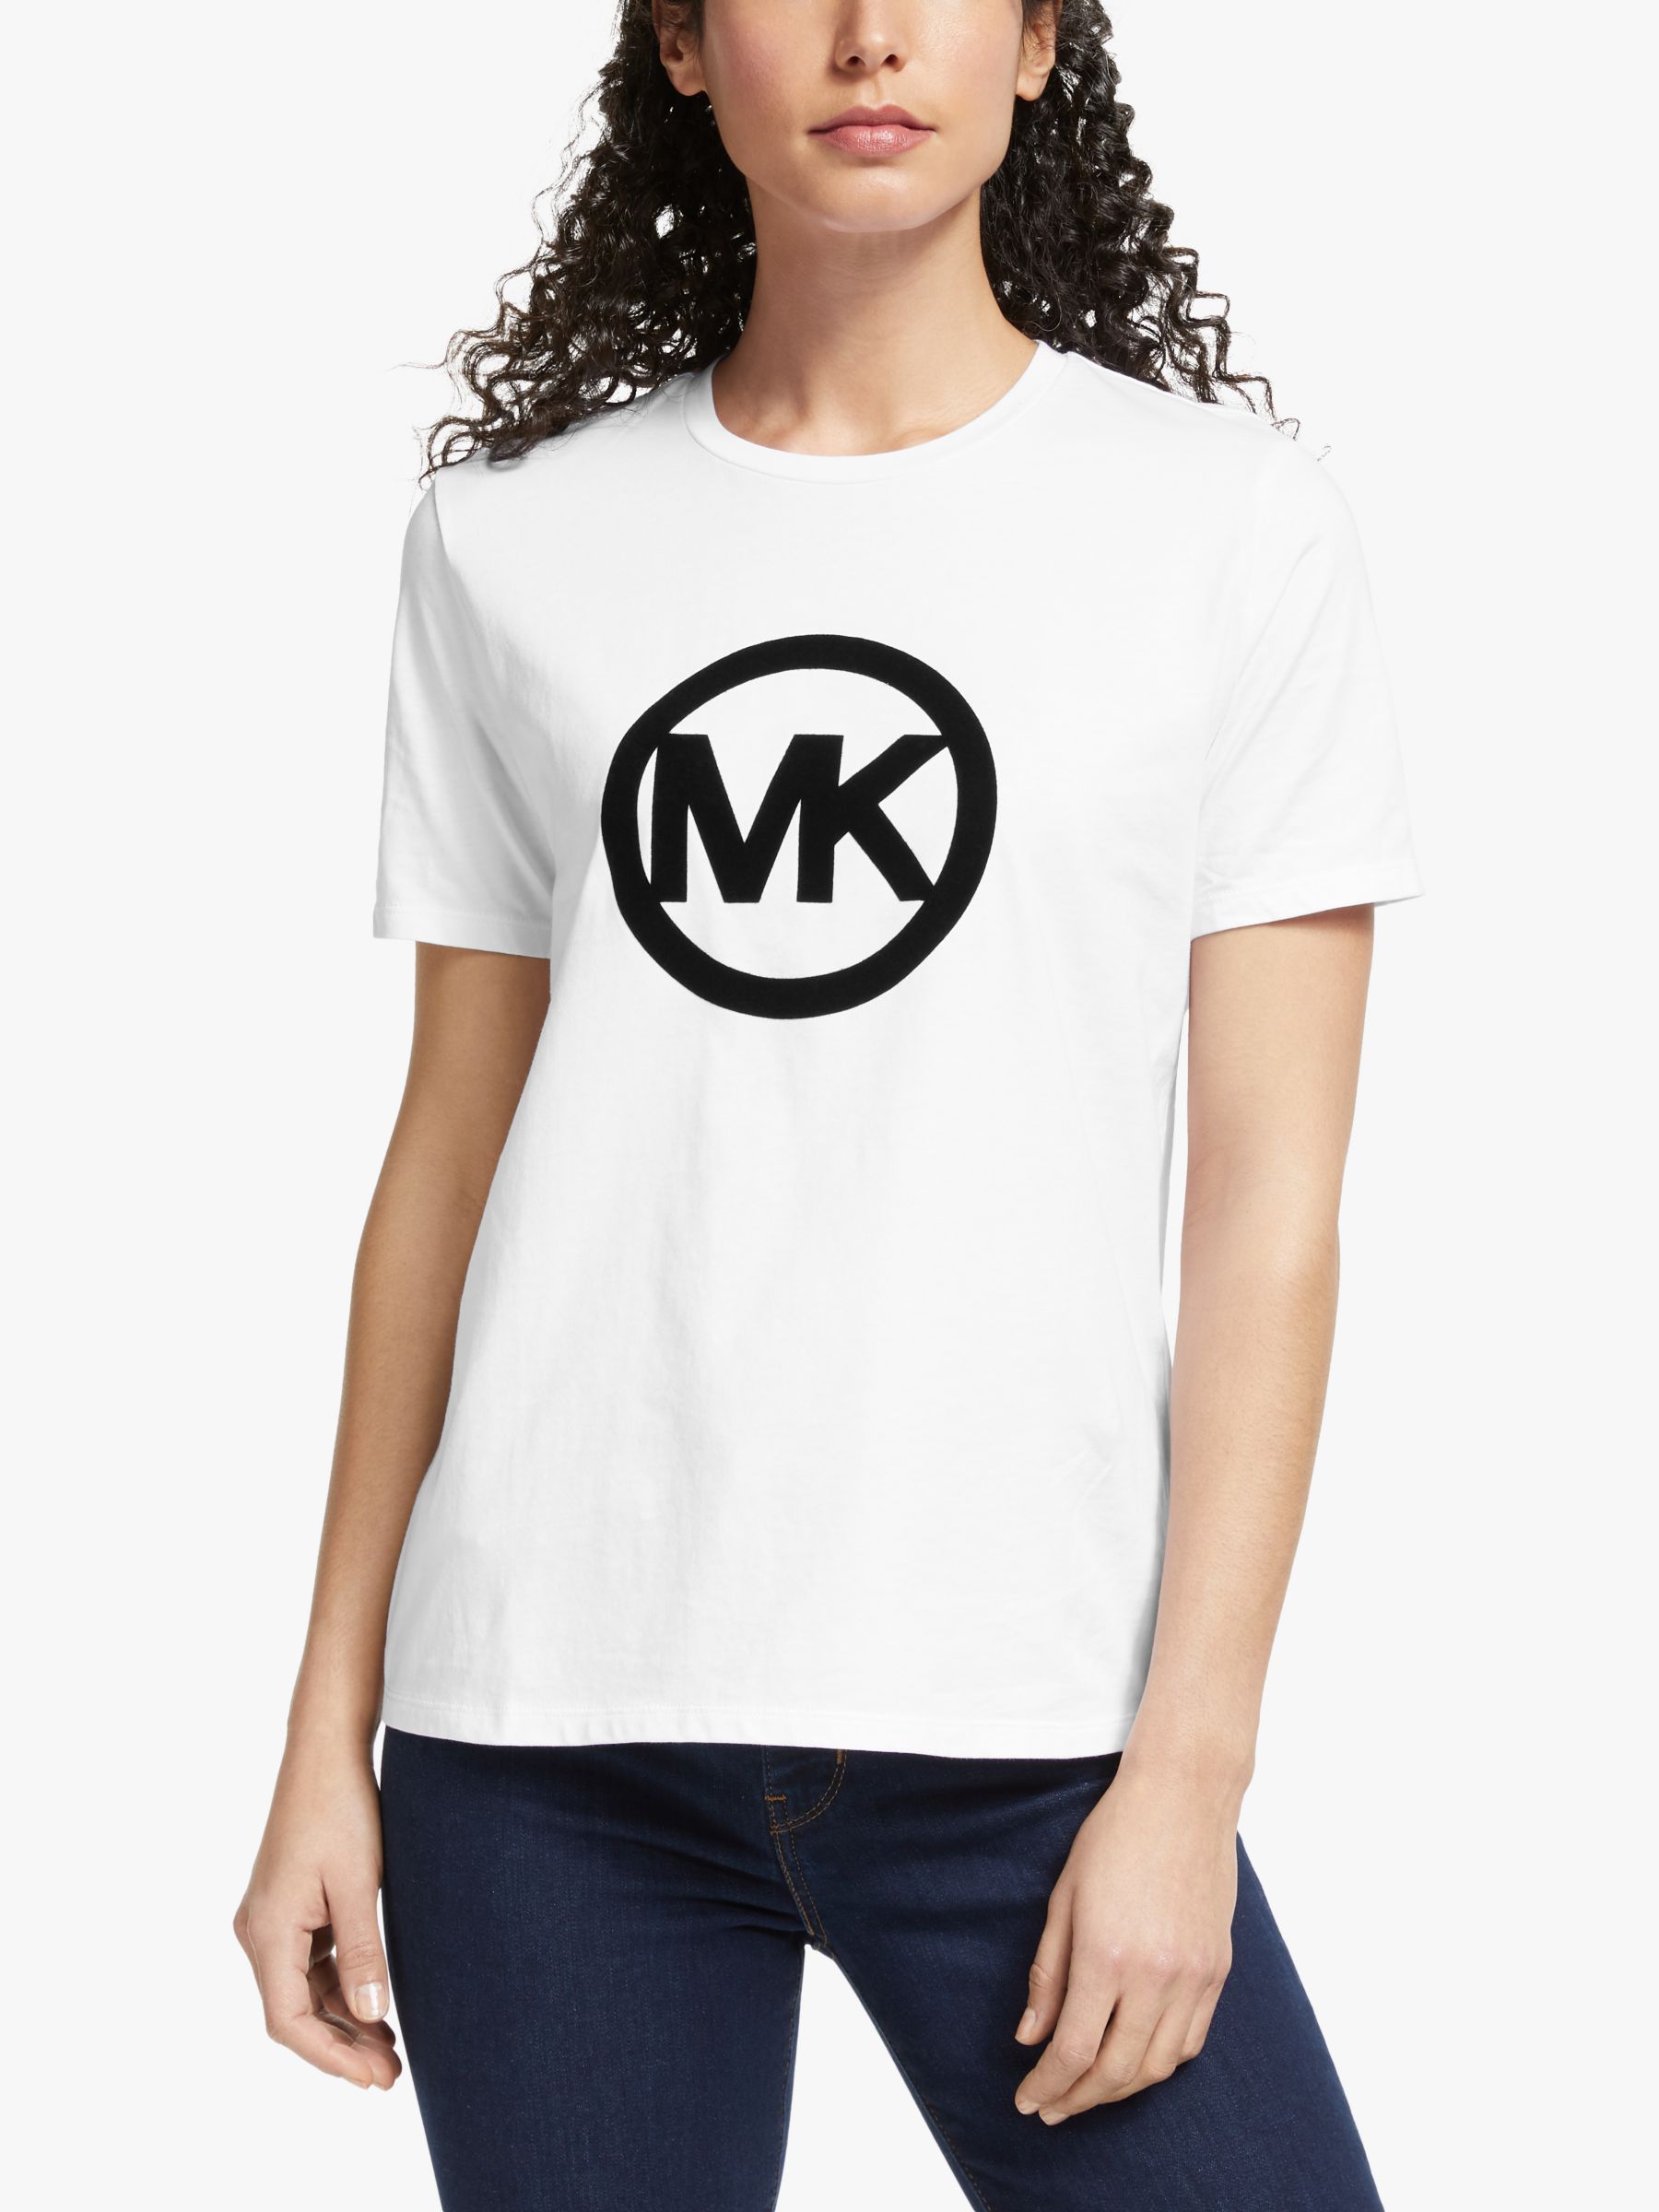 michael kors shirts womens on sale